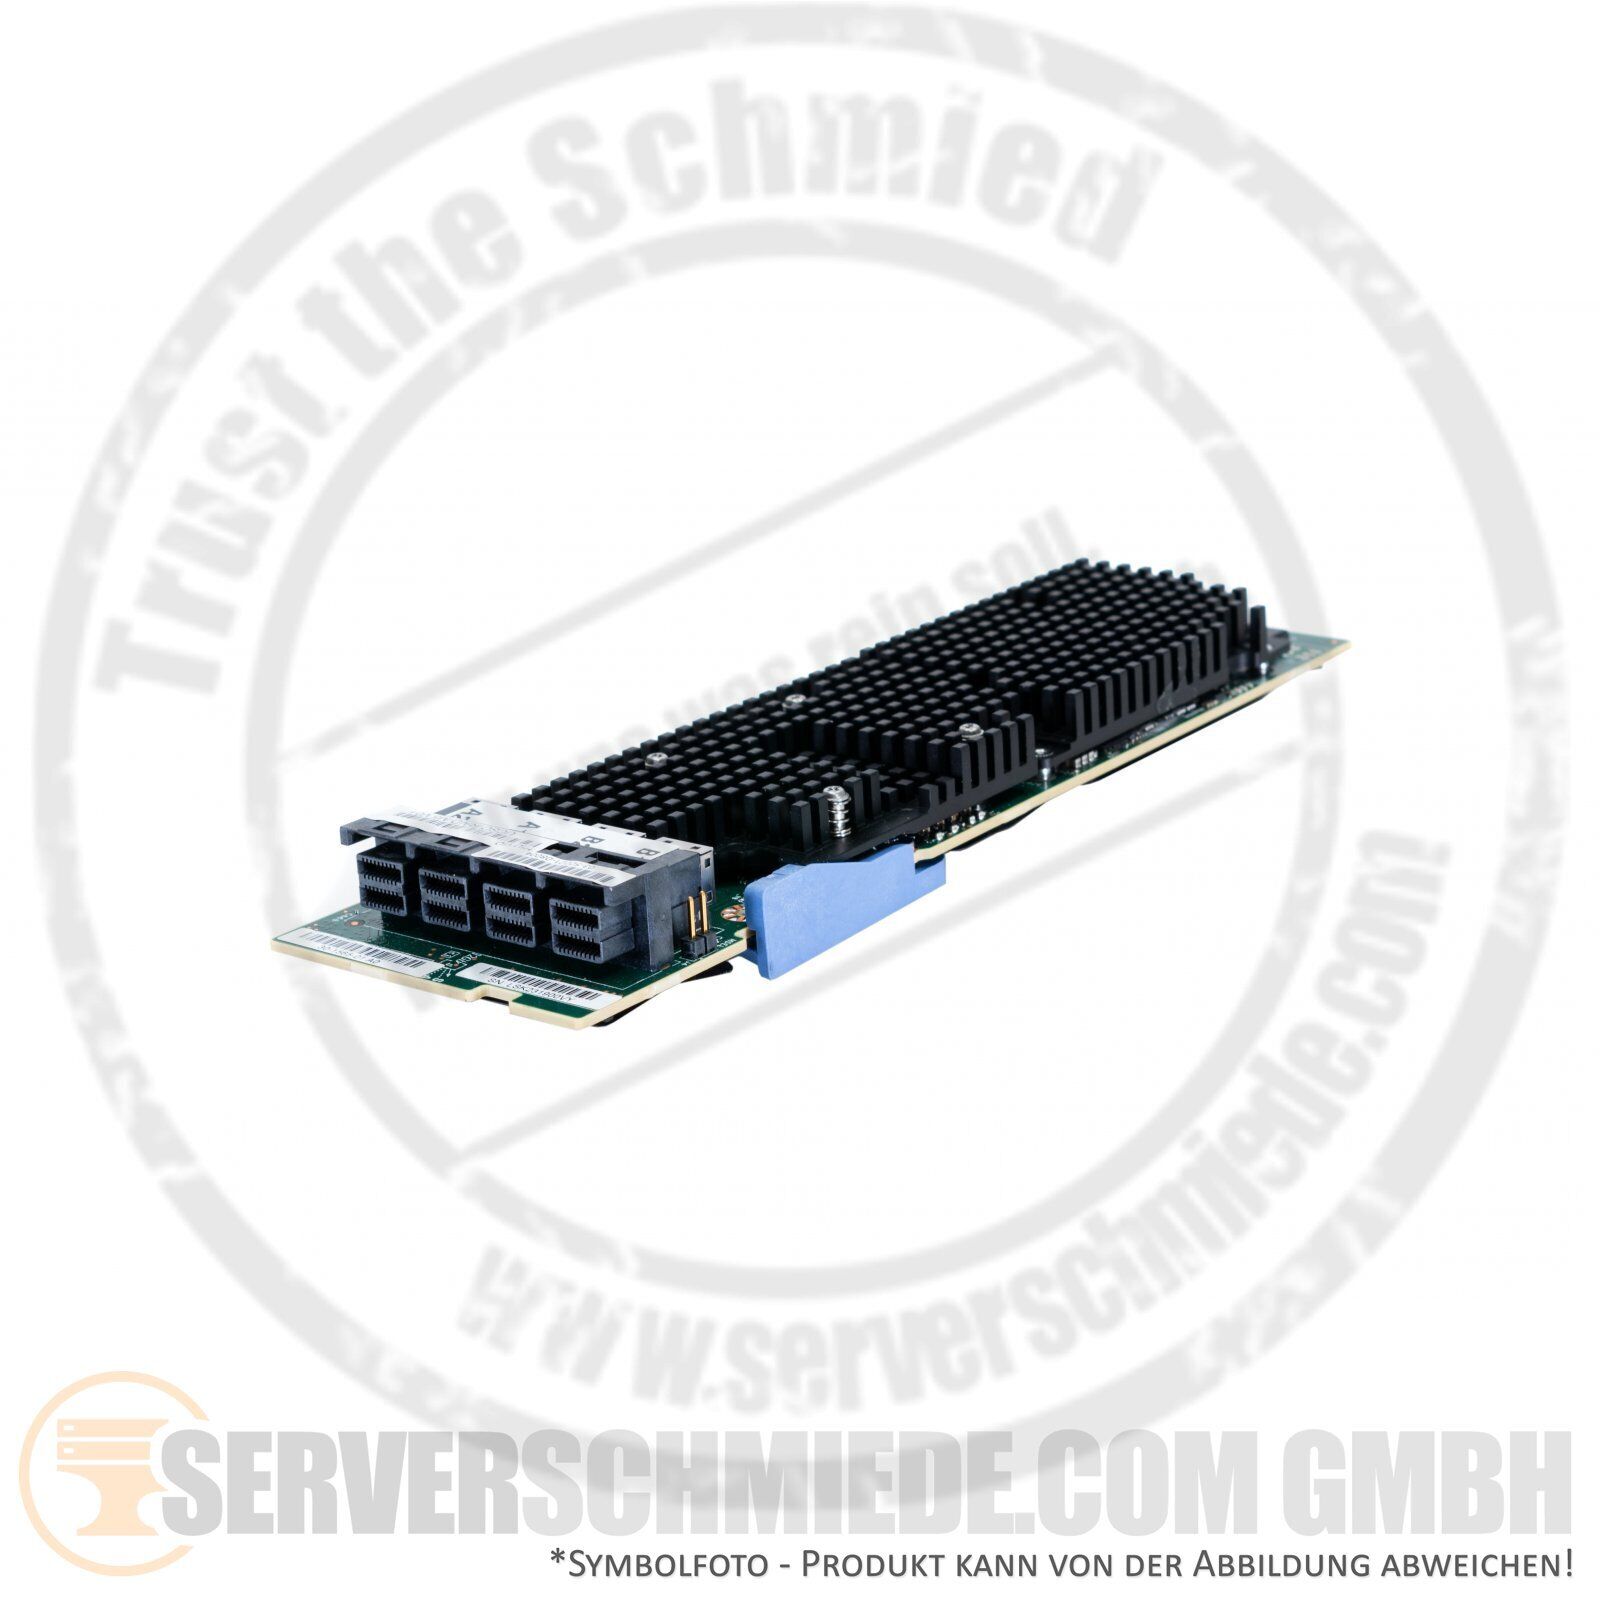 Cisco M5 UCSC-RAID-M5 12G SAS NVMe Tri-Mode 16-Port Raid Storage Controller for 